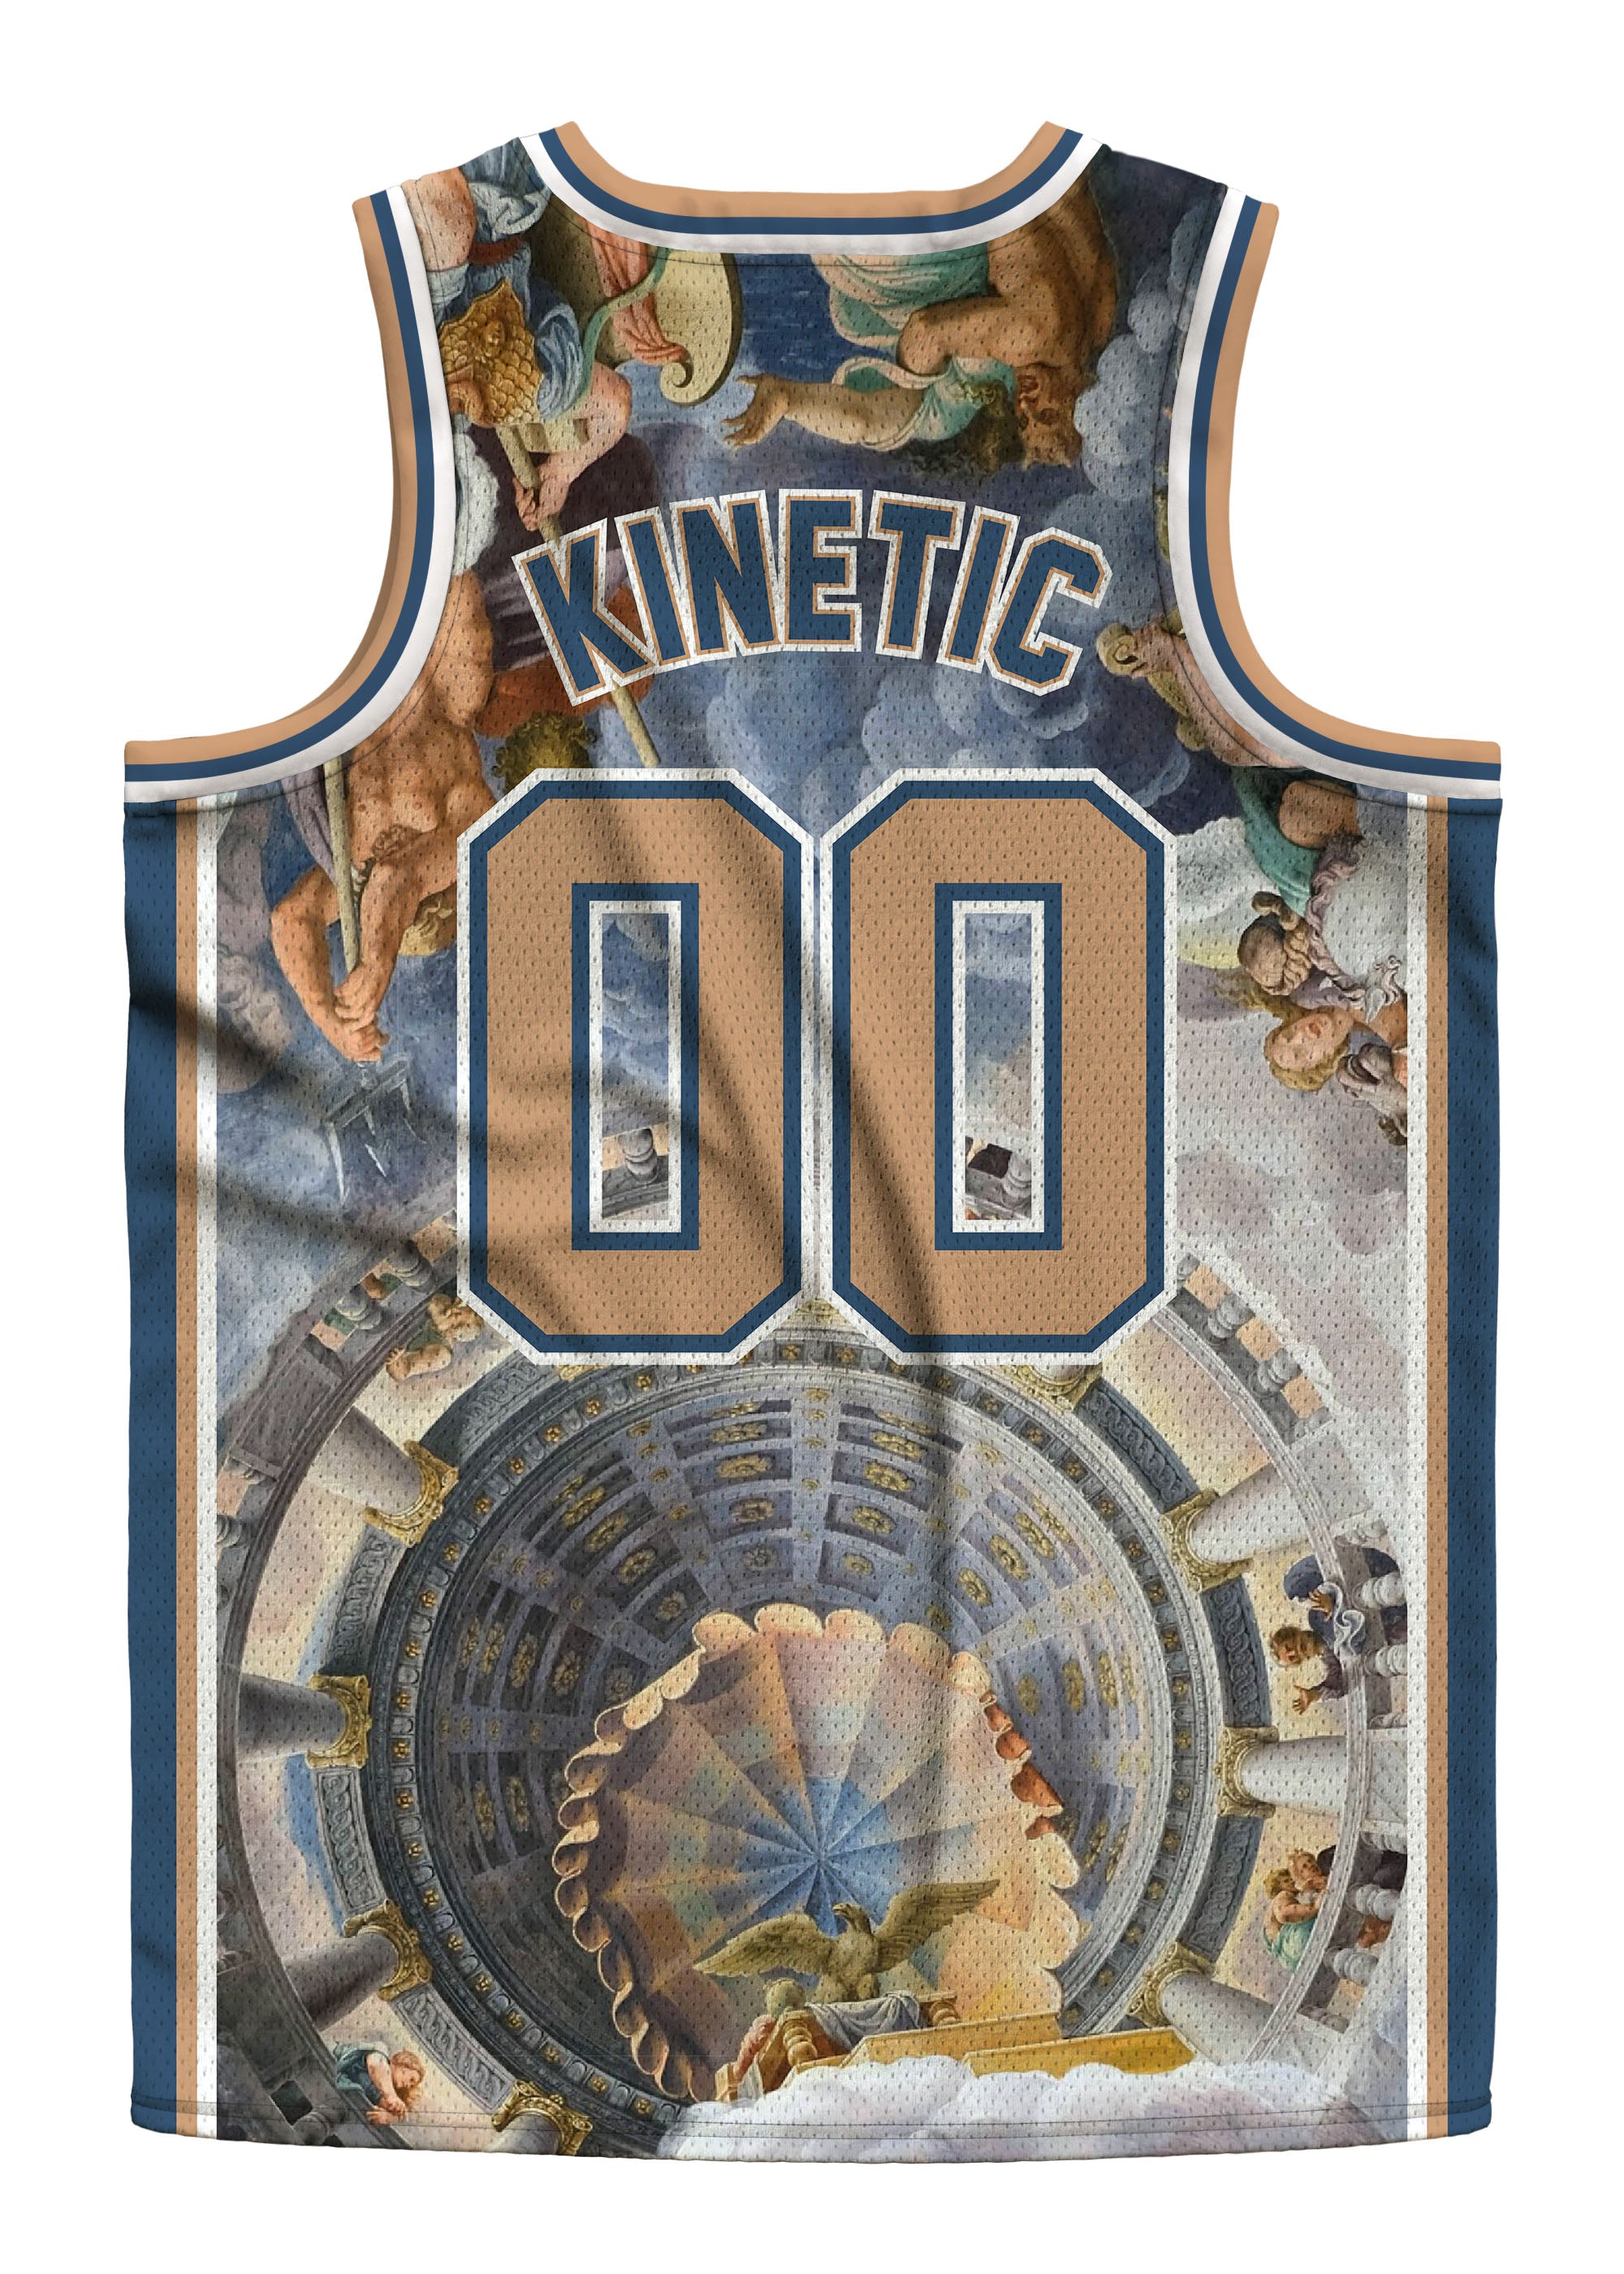 Kappa Sigma - NY Basketball Jersey